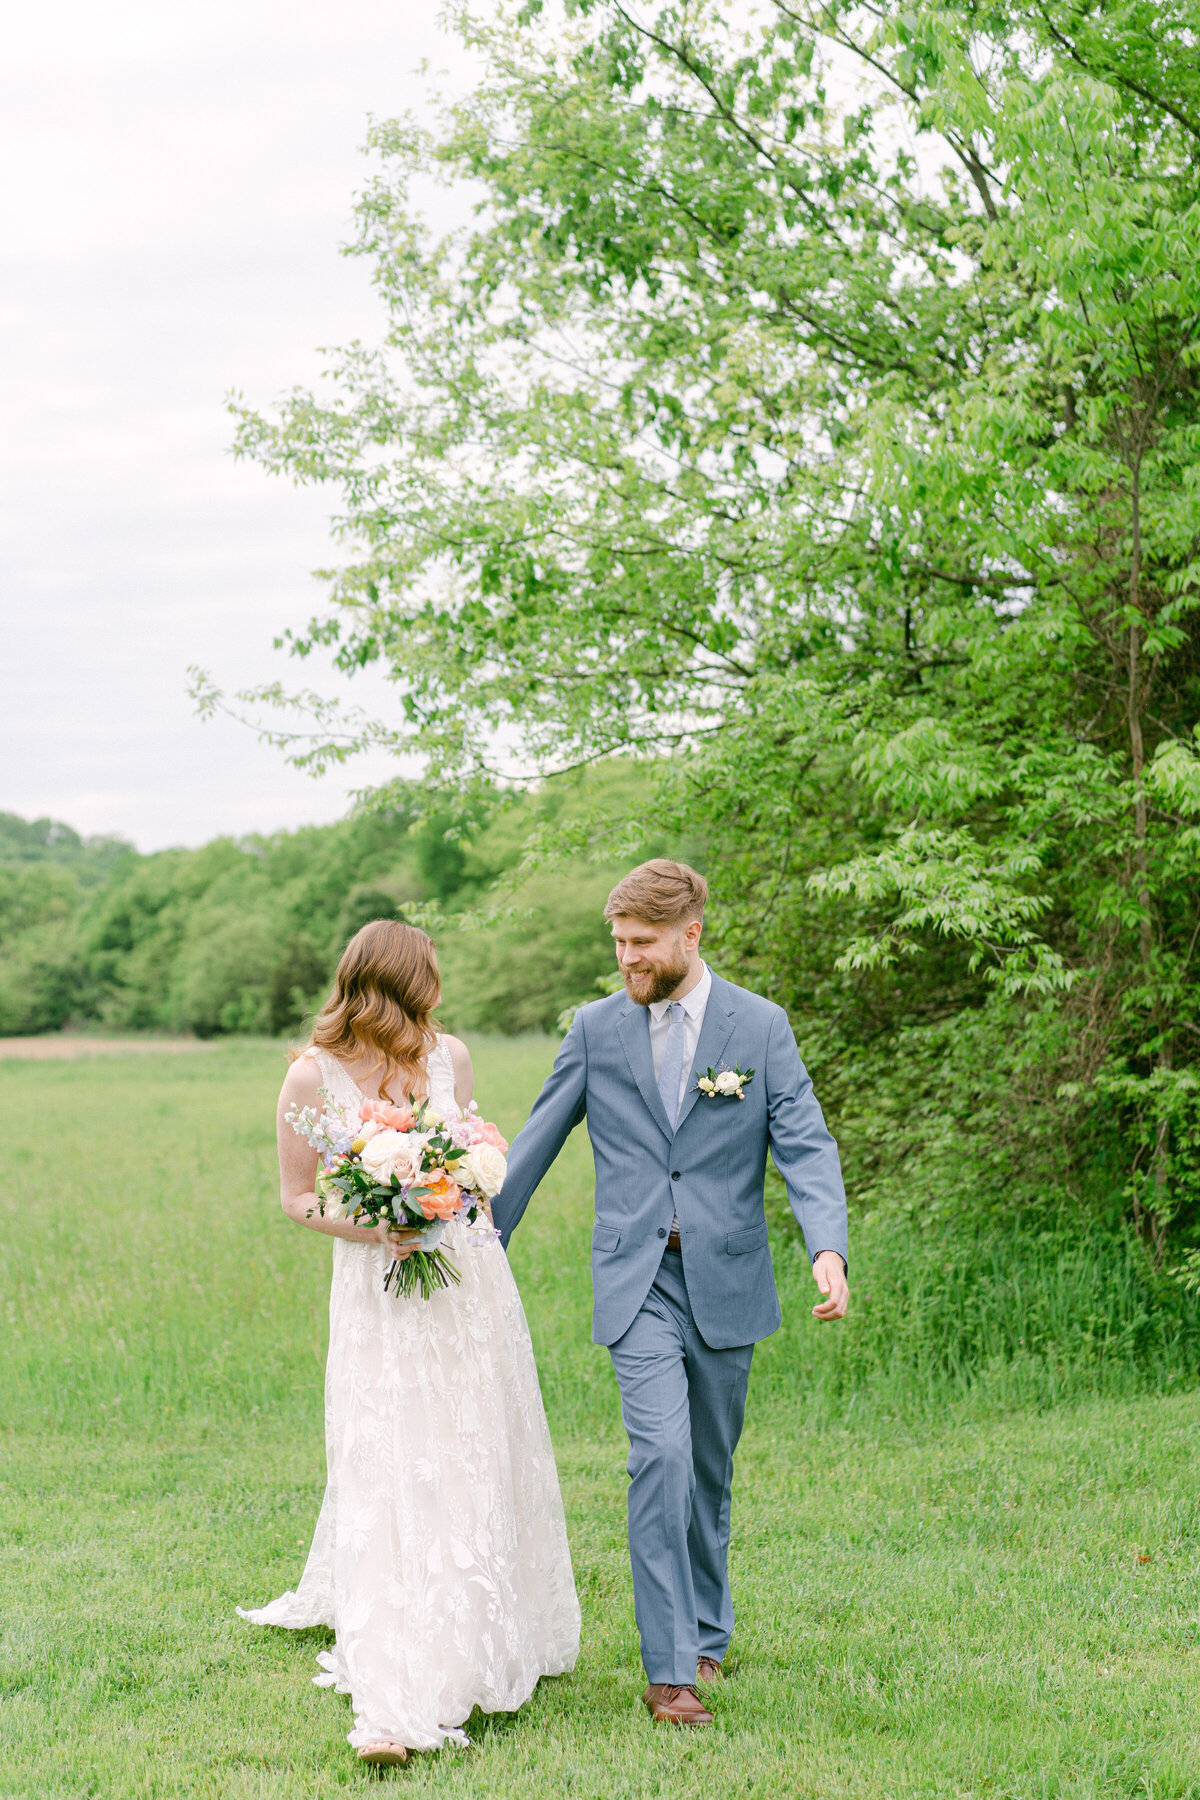 Ava-Vienneau-Nashville-Wedding-Photographer-Southall-Meadows-56